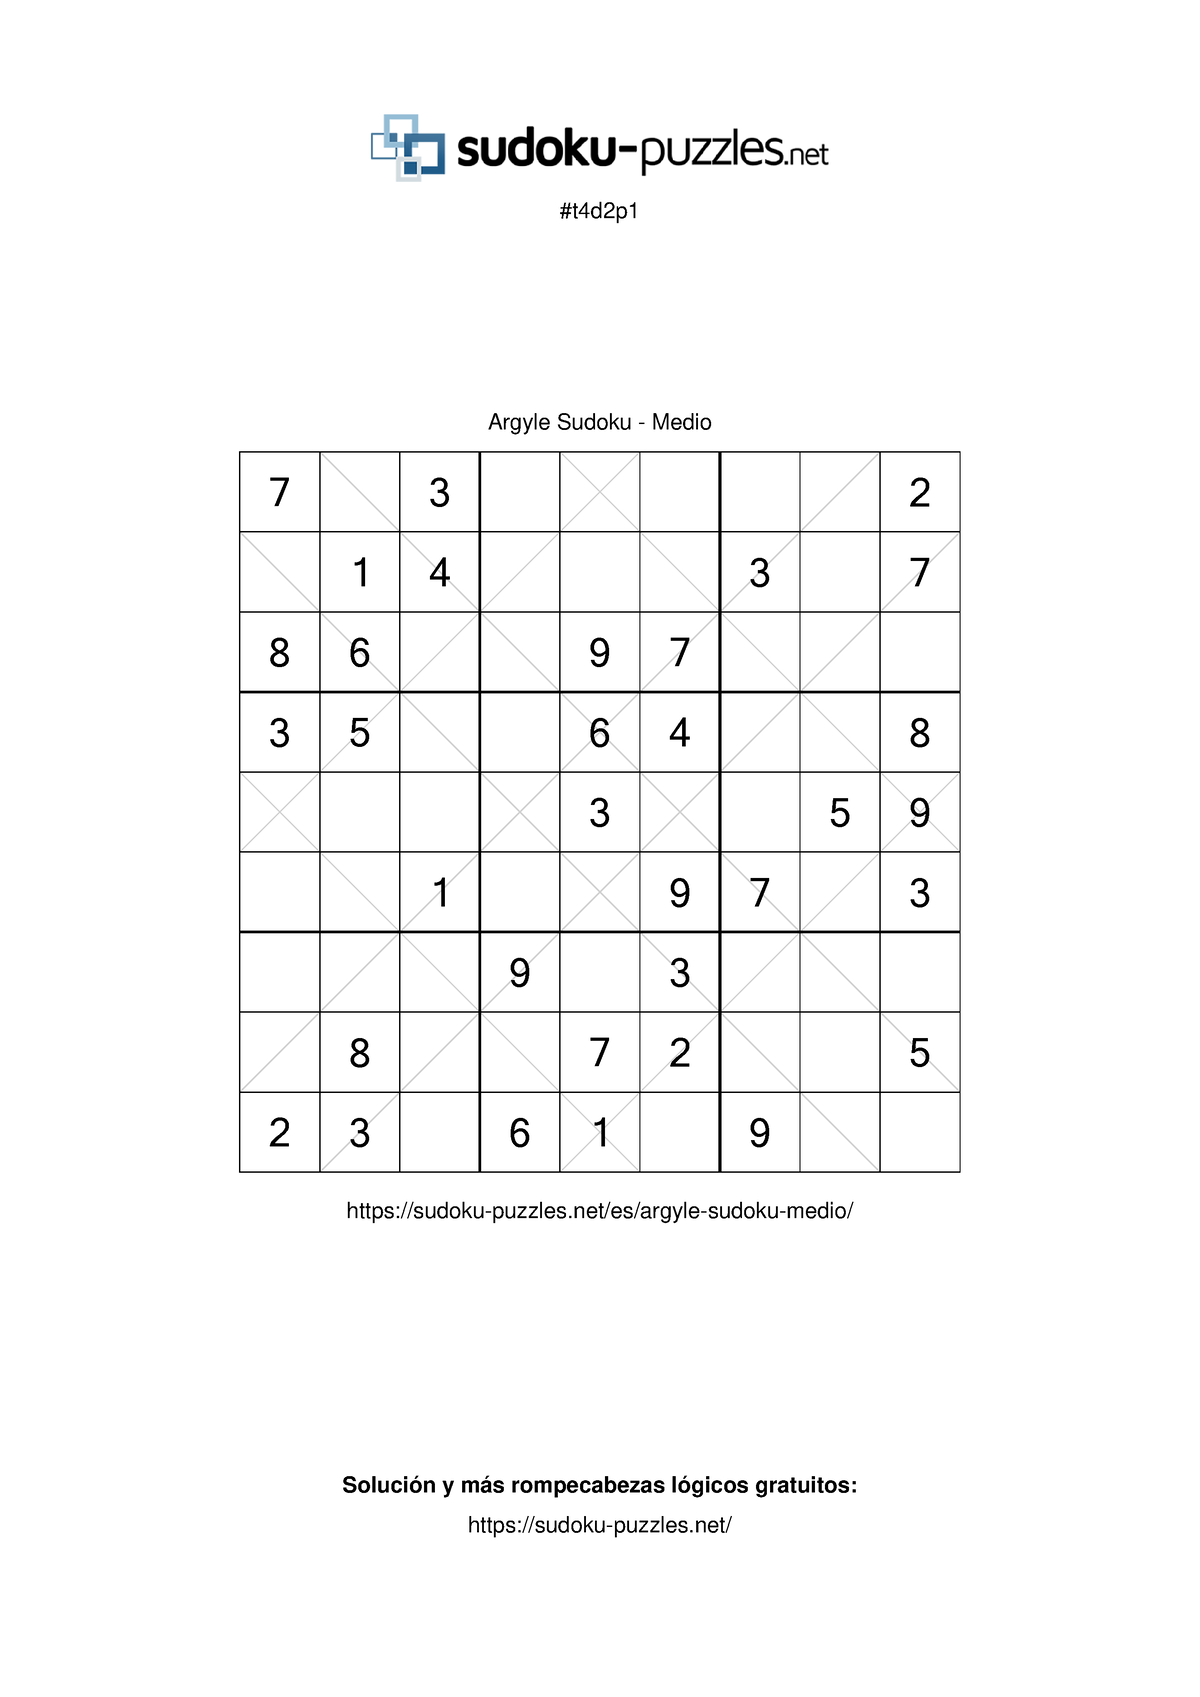 Argyle Sudoku - Médio 